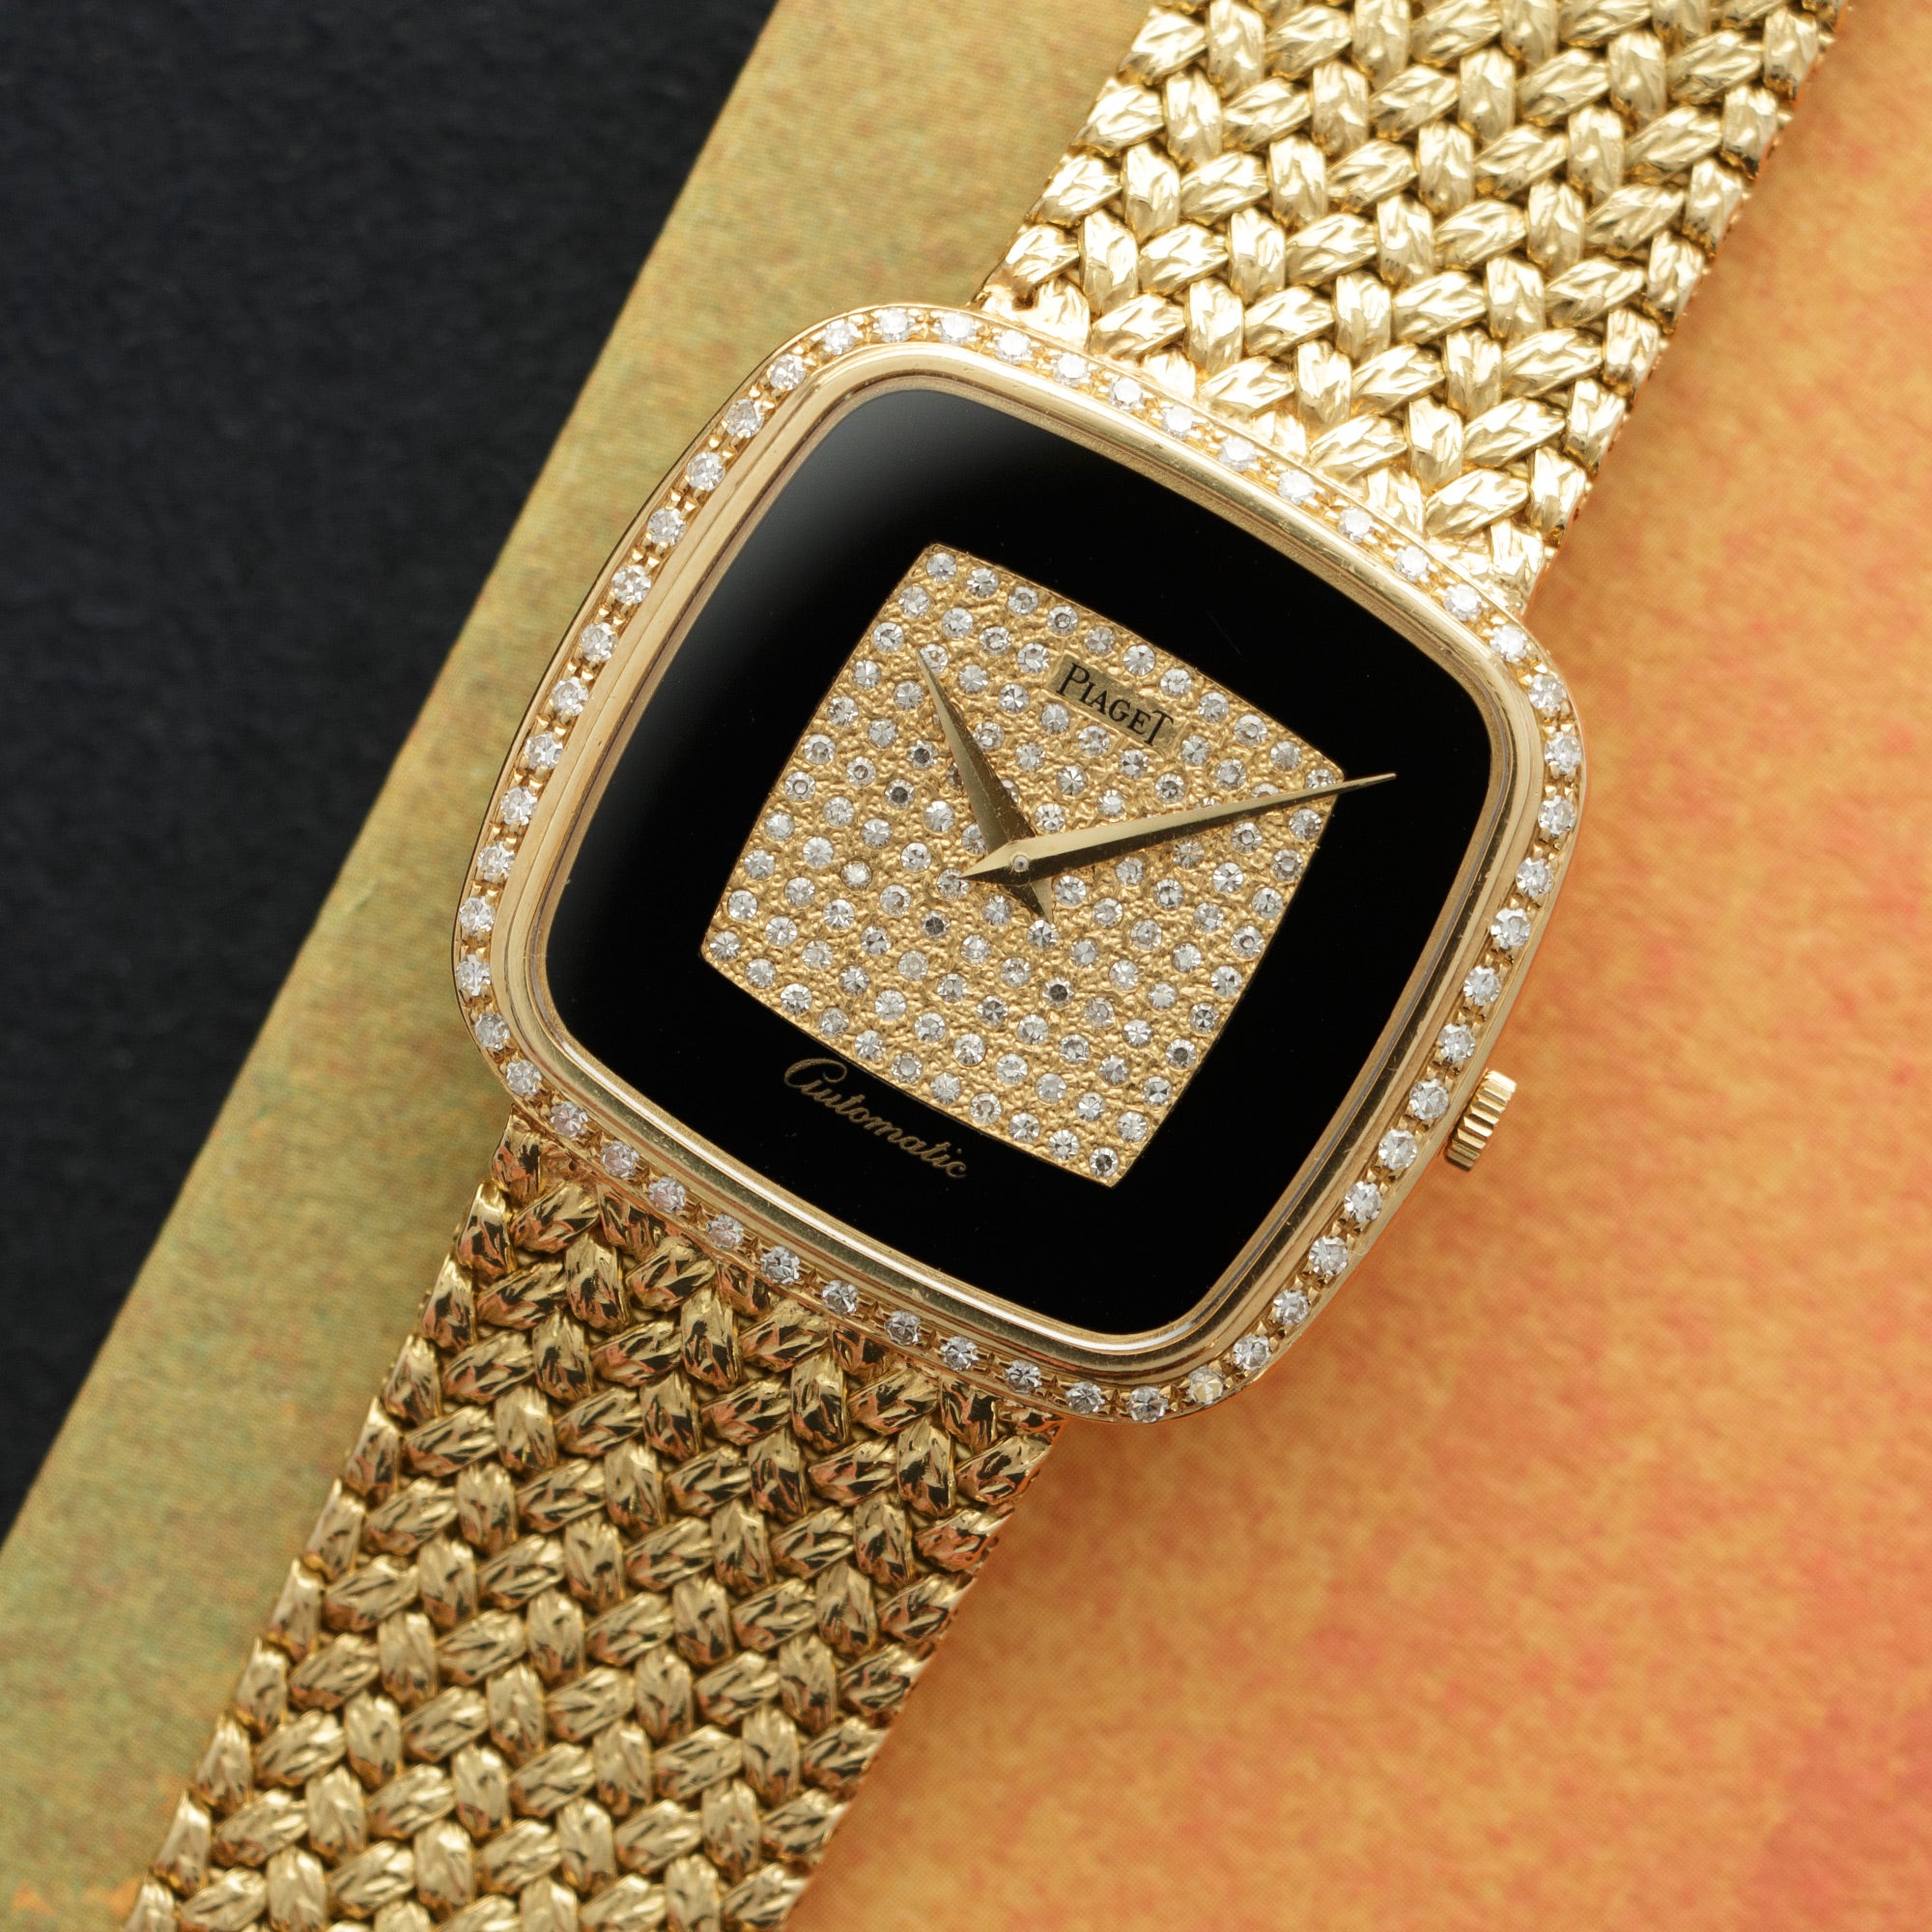 Piaget - Piaget Yellow Gold Onyx Diamond Watch, 1970s - The Keystone Watches